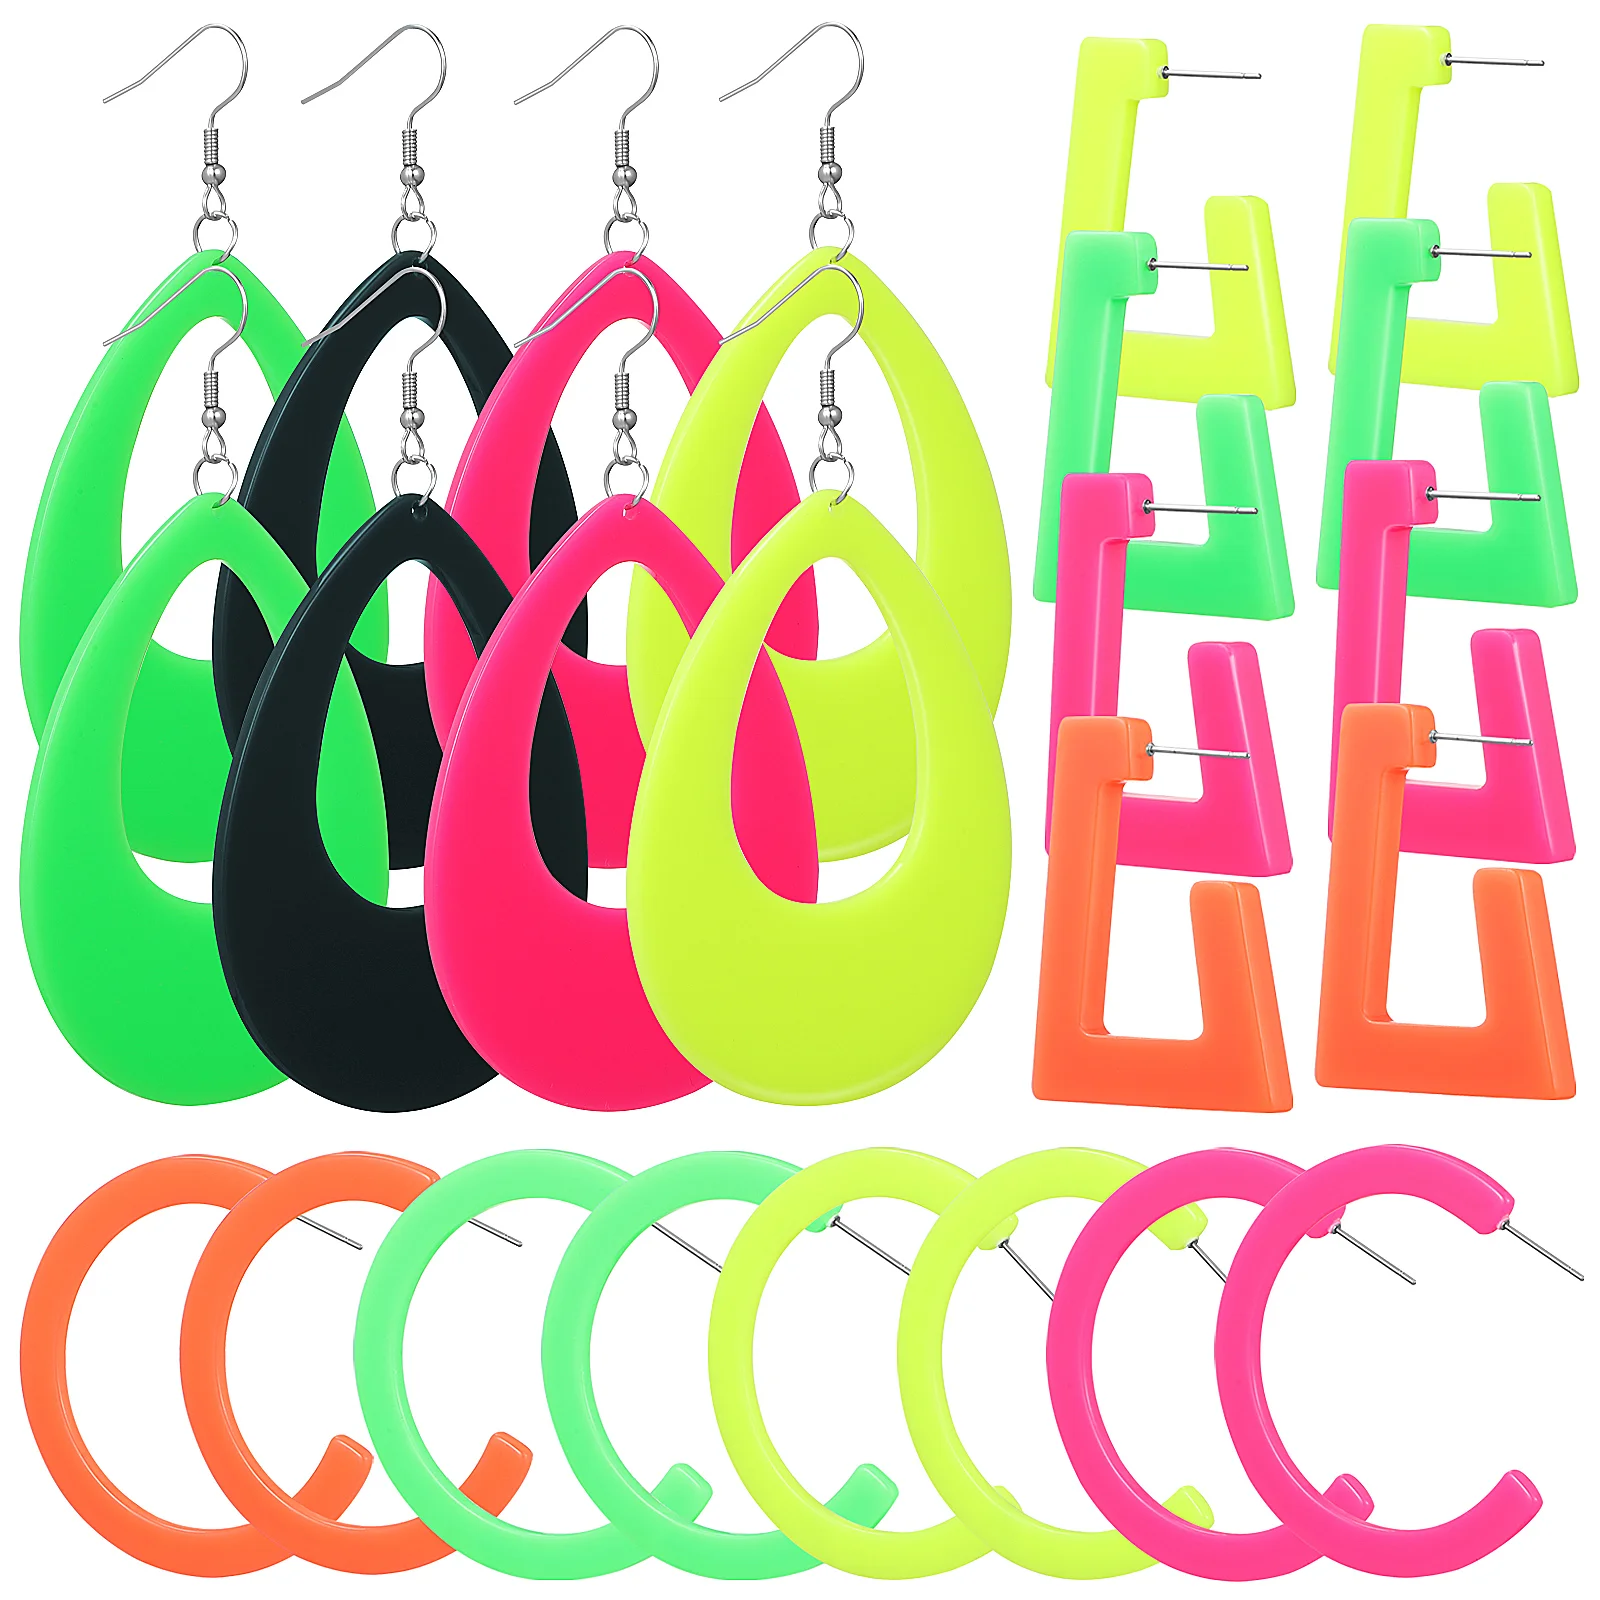 12 Pairs of Neon Earrings Water Drop Dangle Earrings with Geometric Shape Earrings Studs Exaggerated Ear Drops